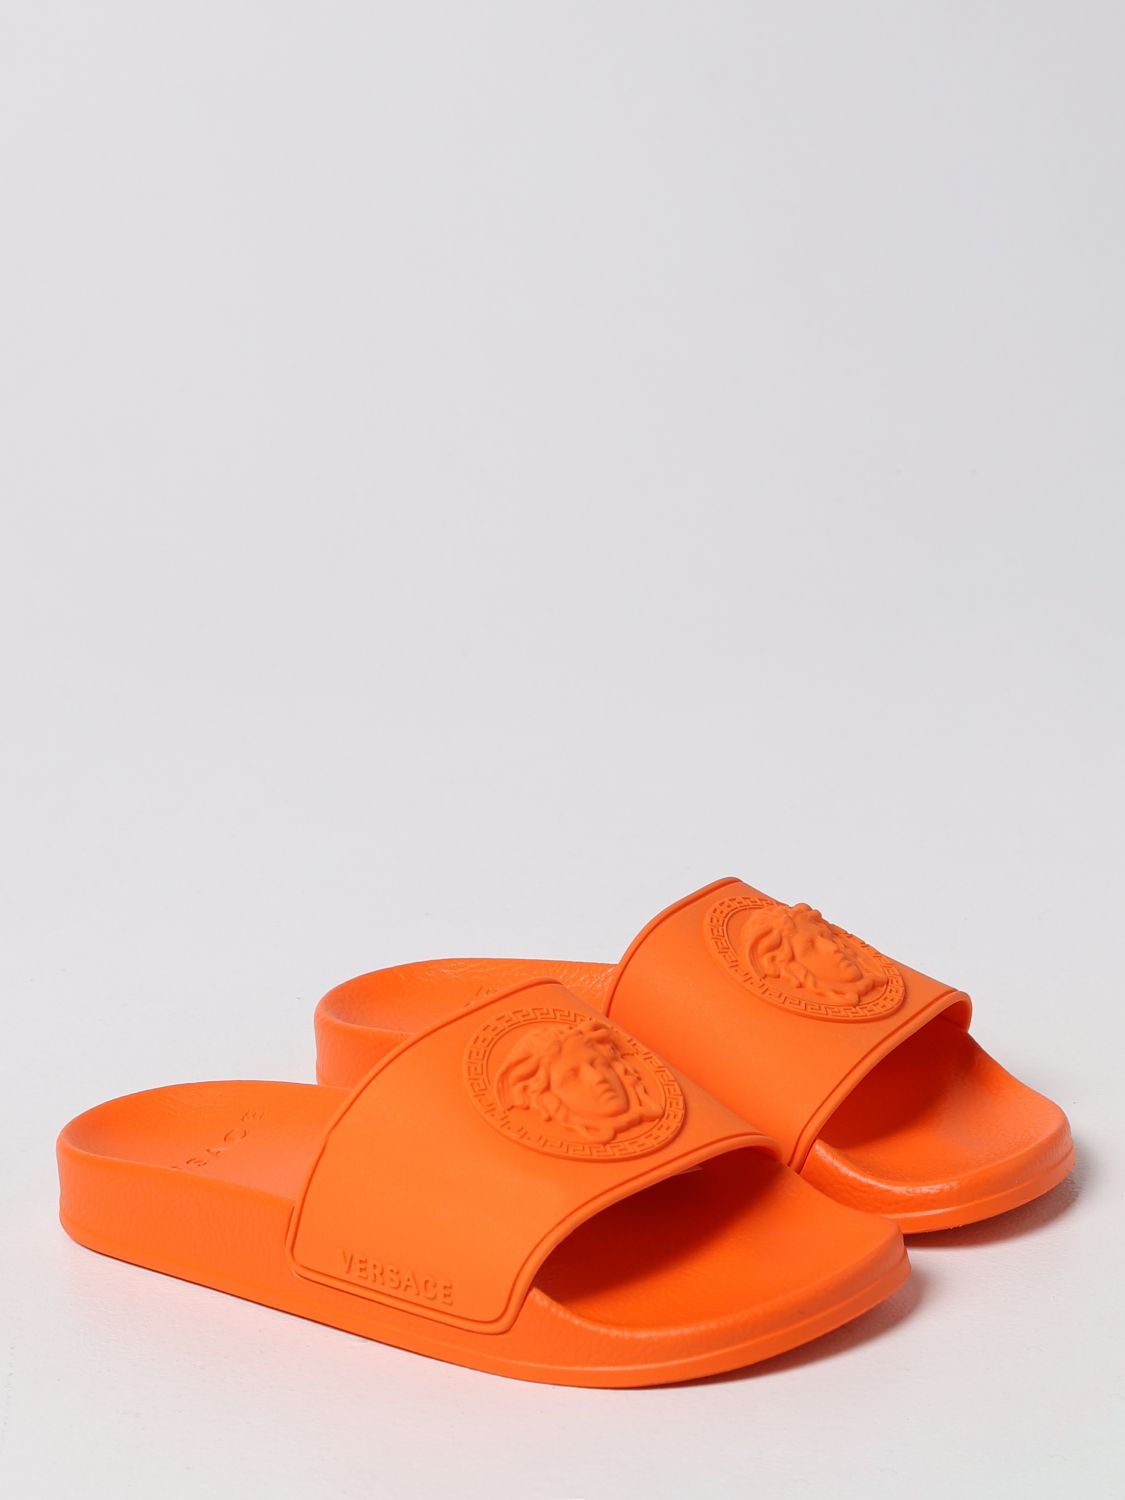 Schuhe Young Versace: Young Versace Jungen Schuhe orange 2